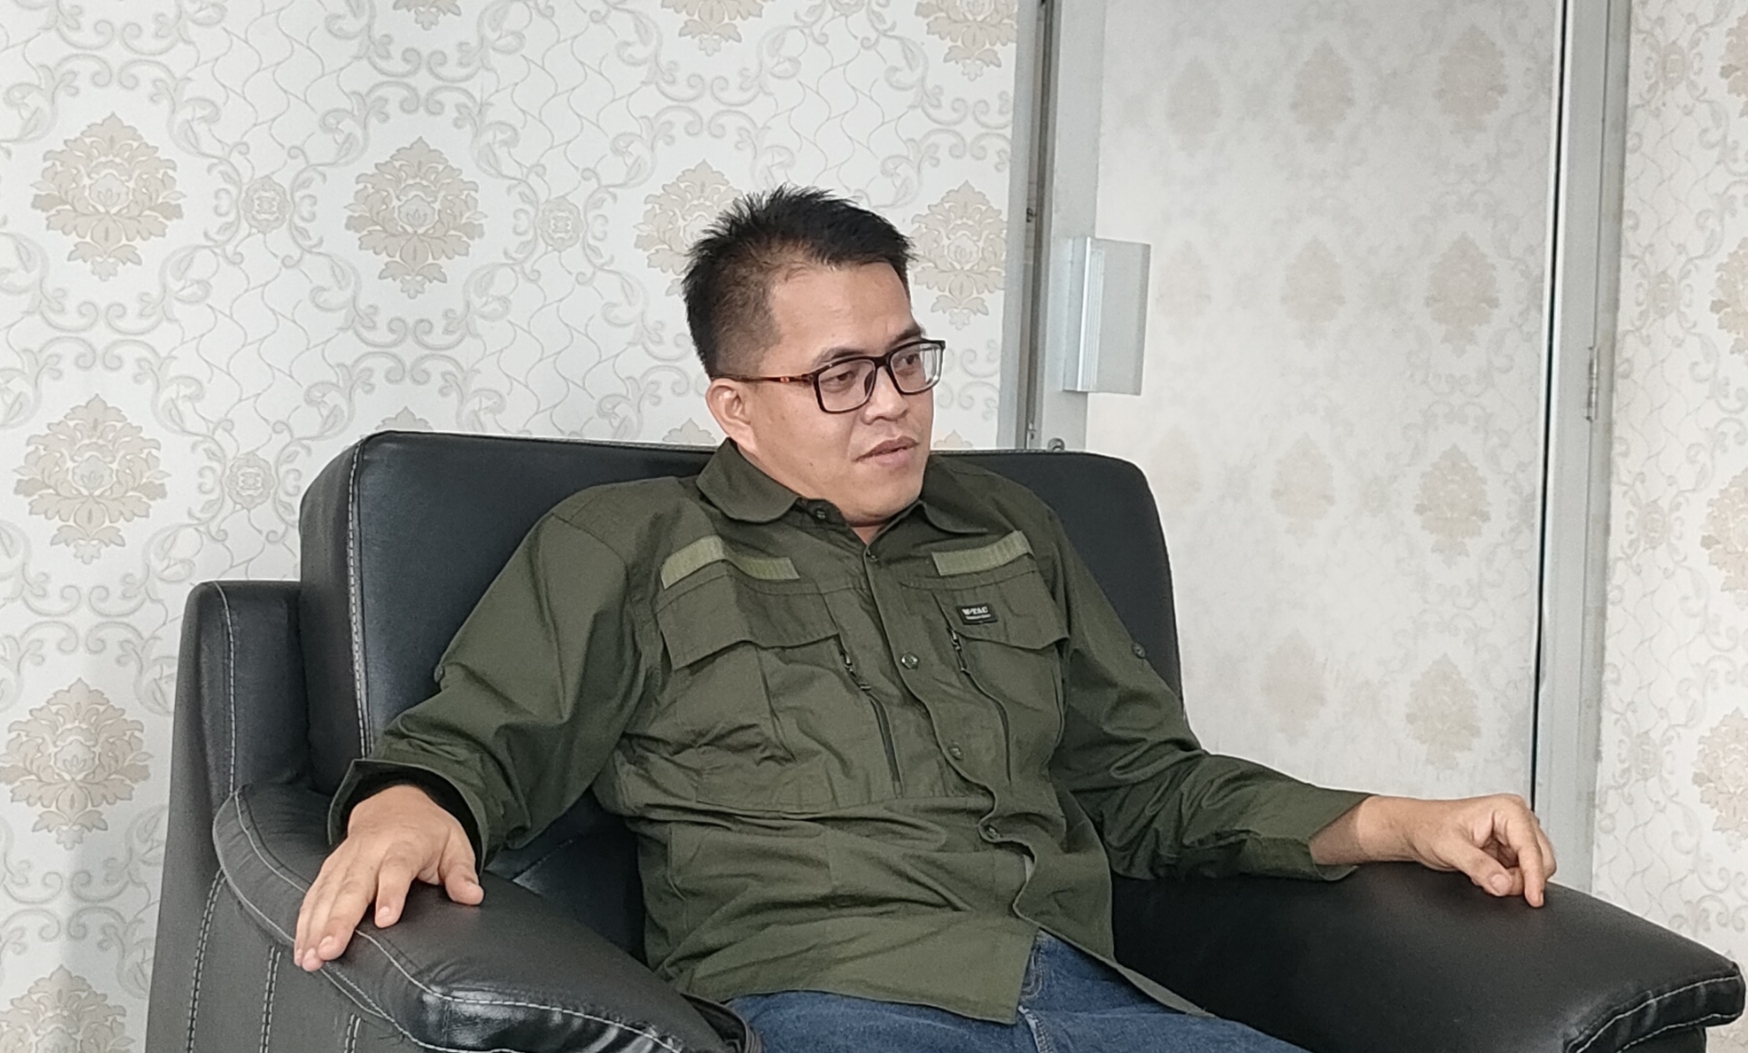 Pemilu Makin Dekat, Ketua KPU Prabumulih Ingatkan PPK PPS Bekerja Maksimal 